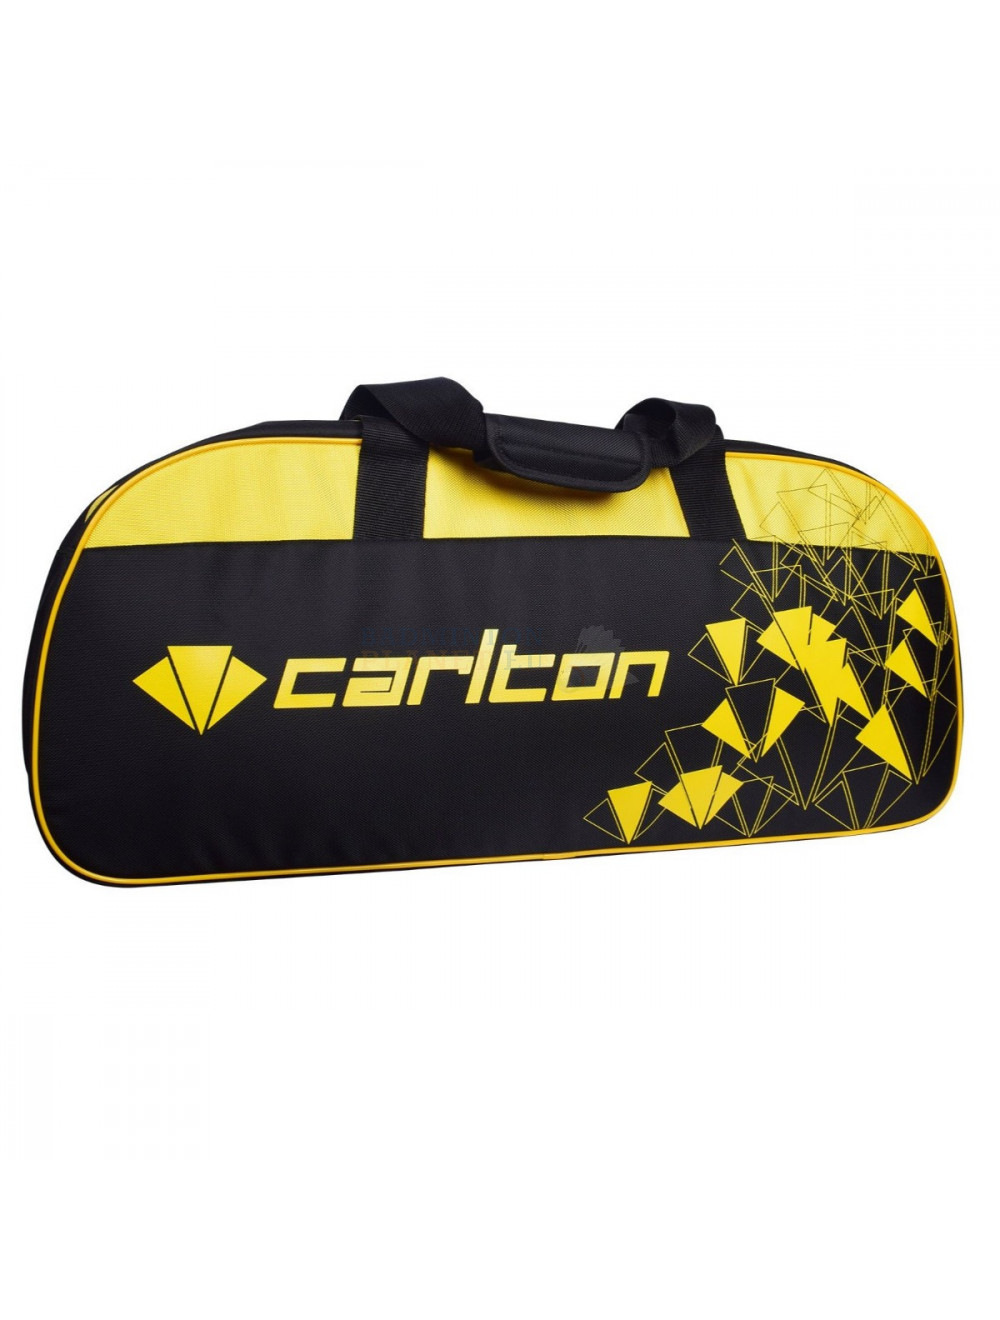 Carlton Airblade Square Bag badminton bag? - Badmintonplanet.eu